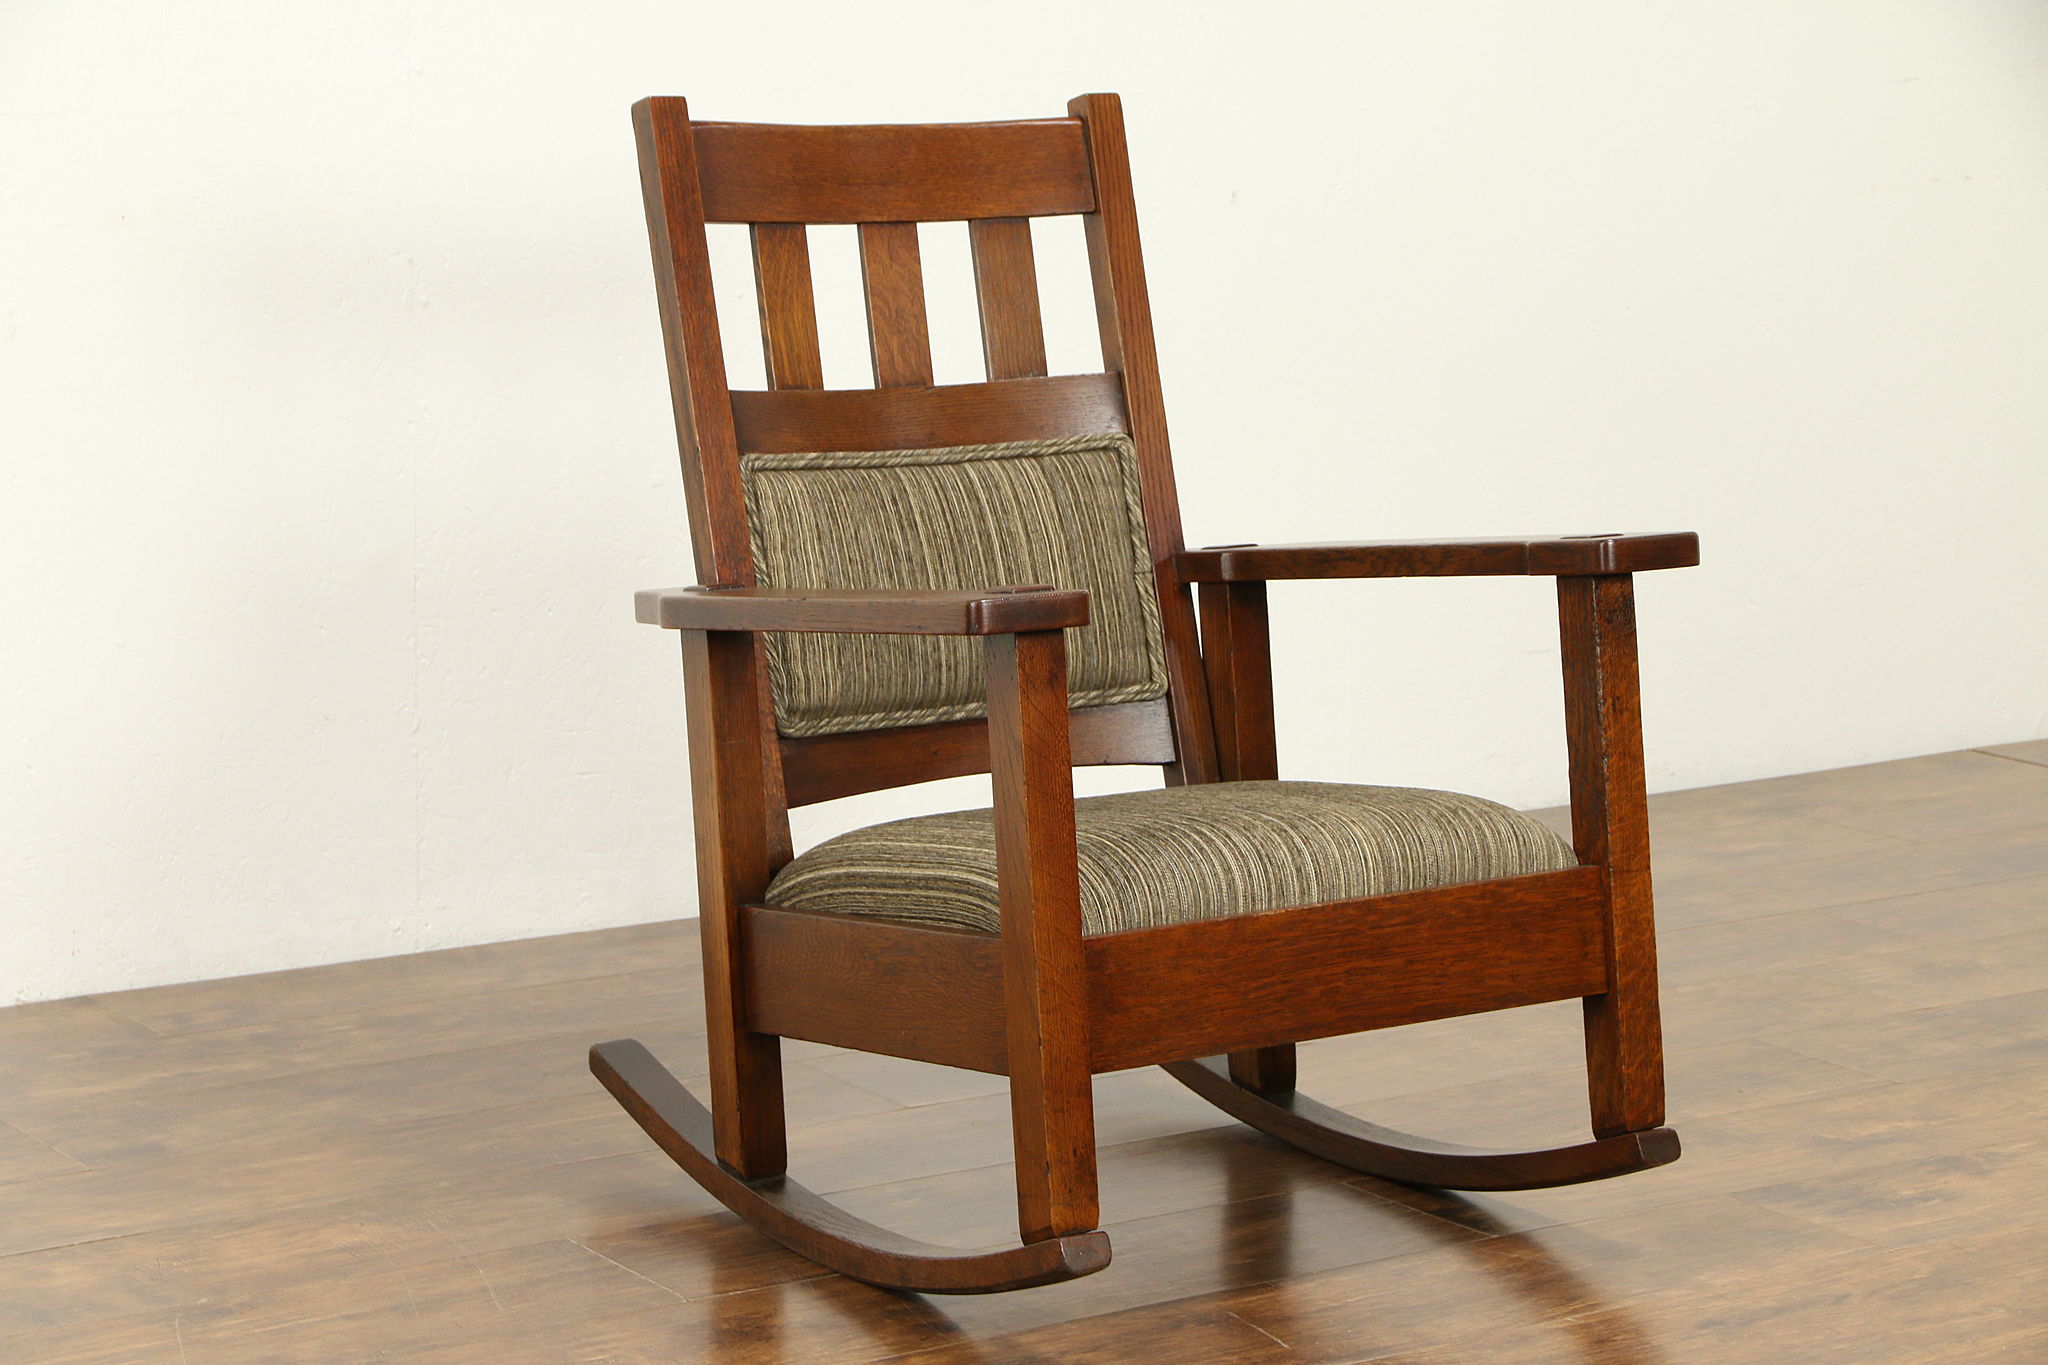 Sold Arts Crafts Mission Oak Antique Rocker Craftsman Rocking Chair 32474 Harp Gallery Antiques Furniture